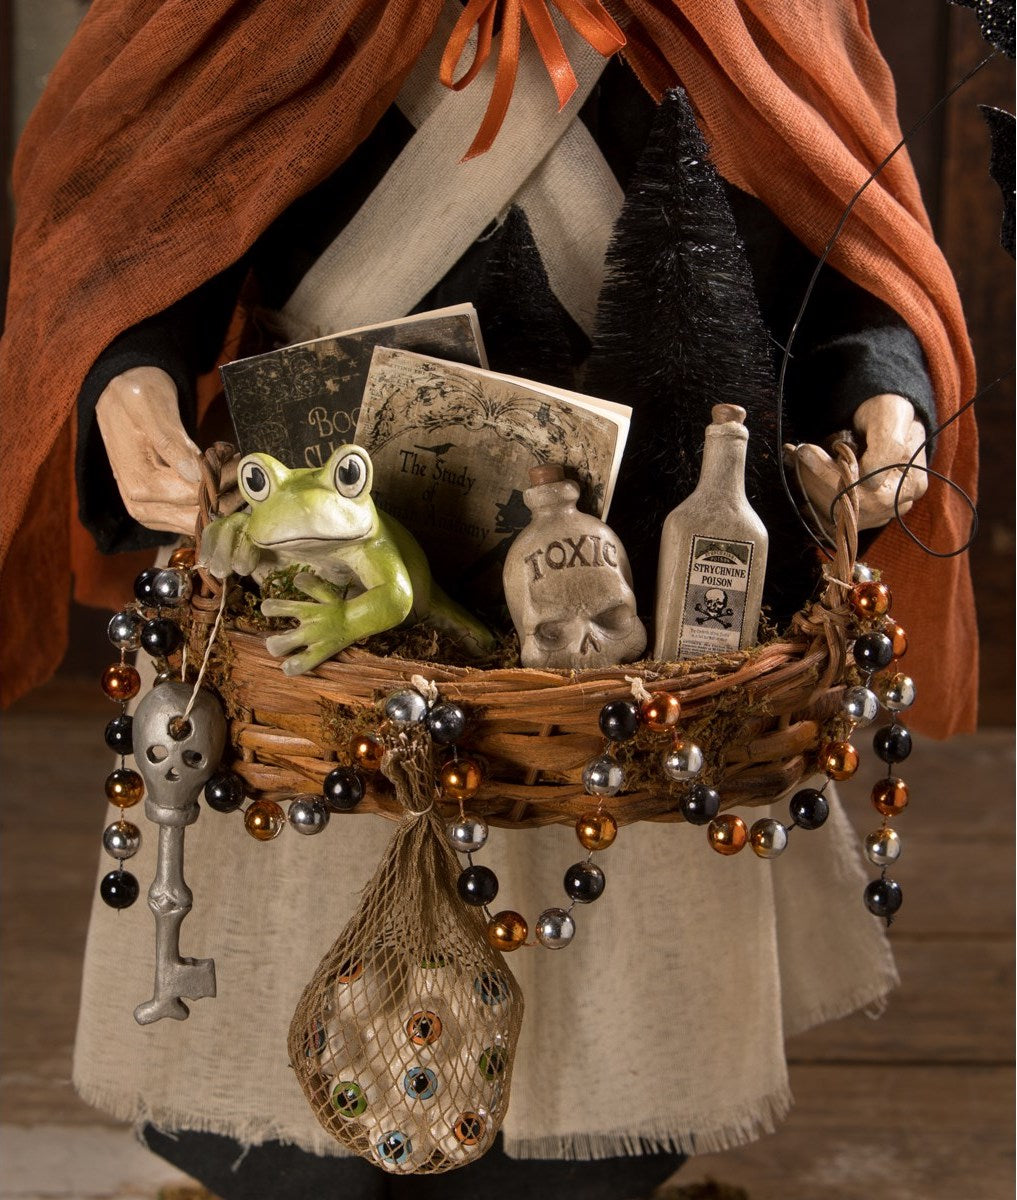 Brewhilda Witch Peddler Basket Full of Halloween Decorations